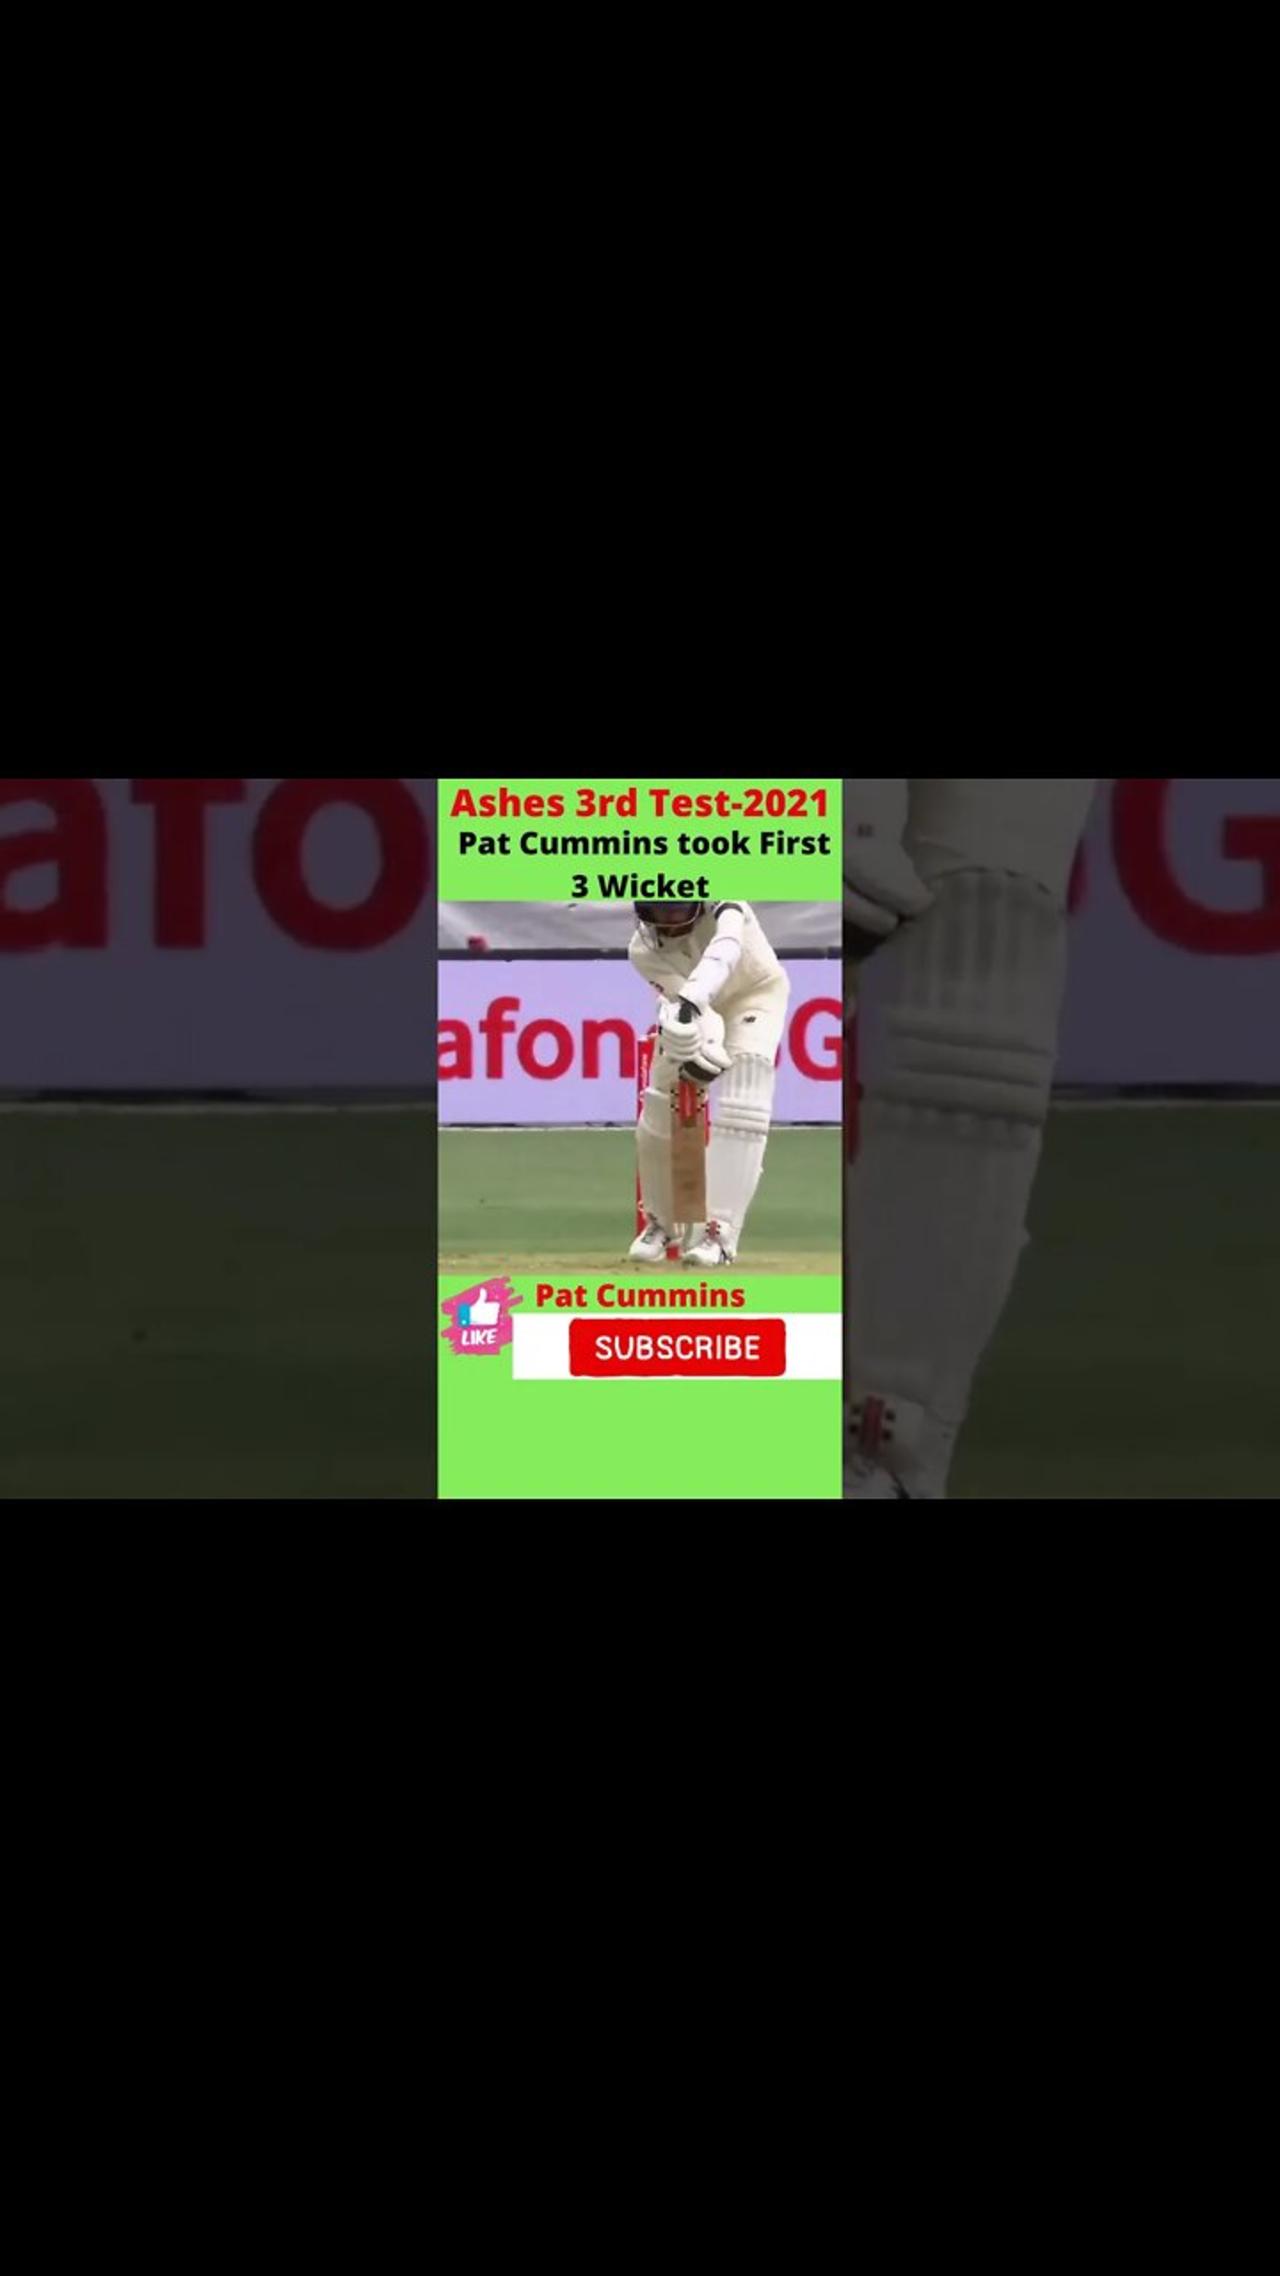 Cummins took amazing 3 wickets ashes 3rd test 2021|#shorts #cricket #ashes2021 #YTshort #AusvsEng